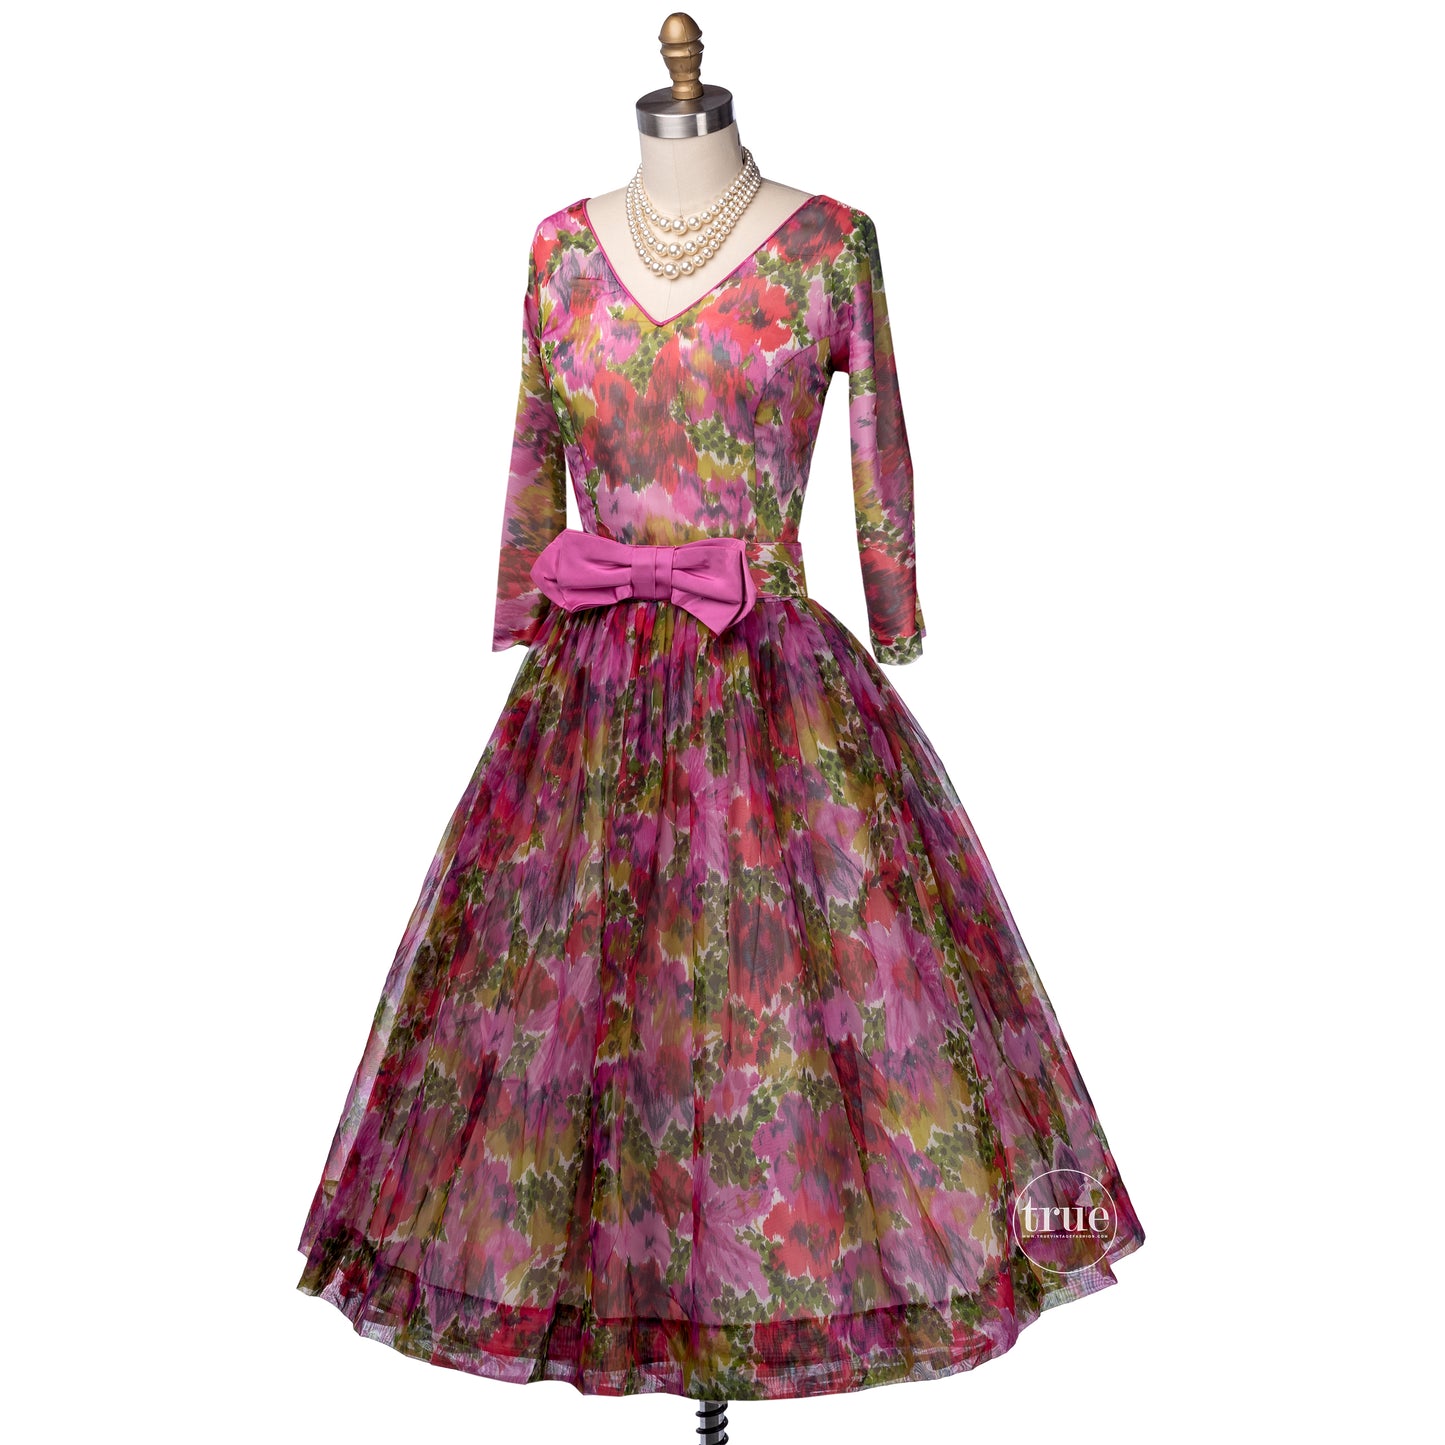 vintage 1950's dress ...colorful floral chiffon full skirt dress